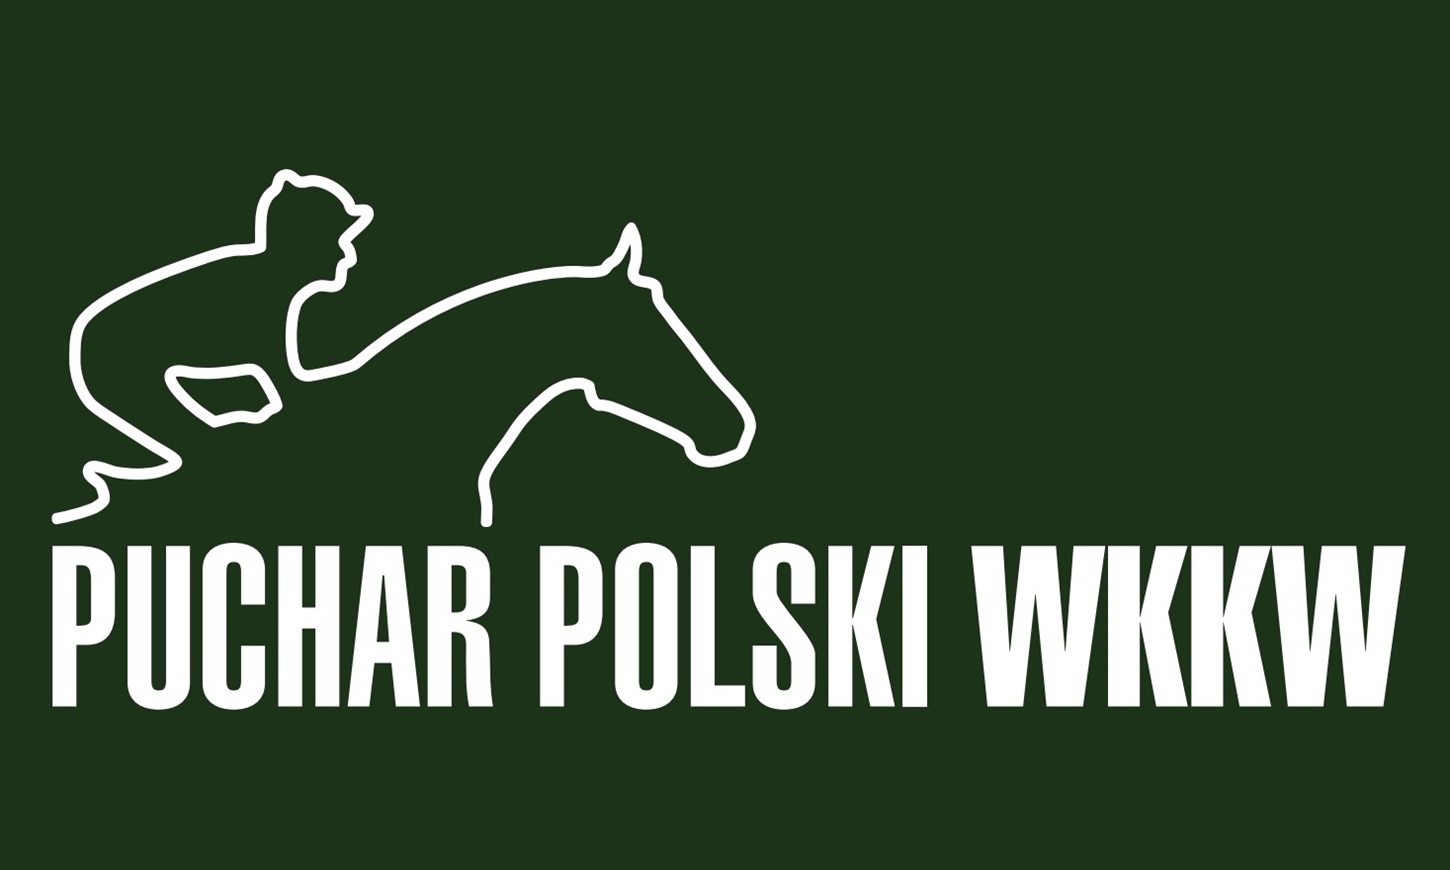 Puchar Polski WKKW